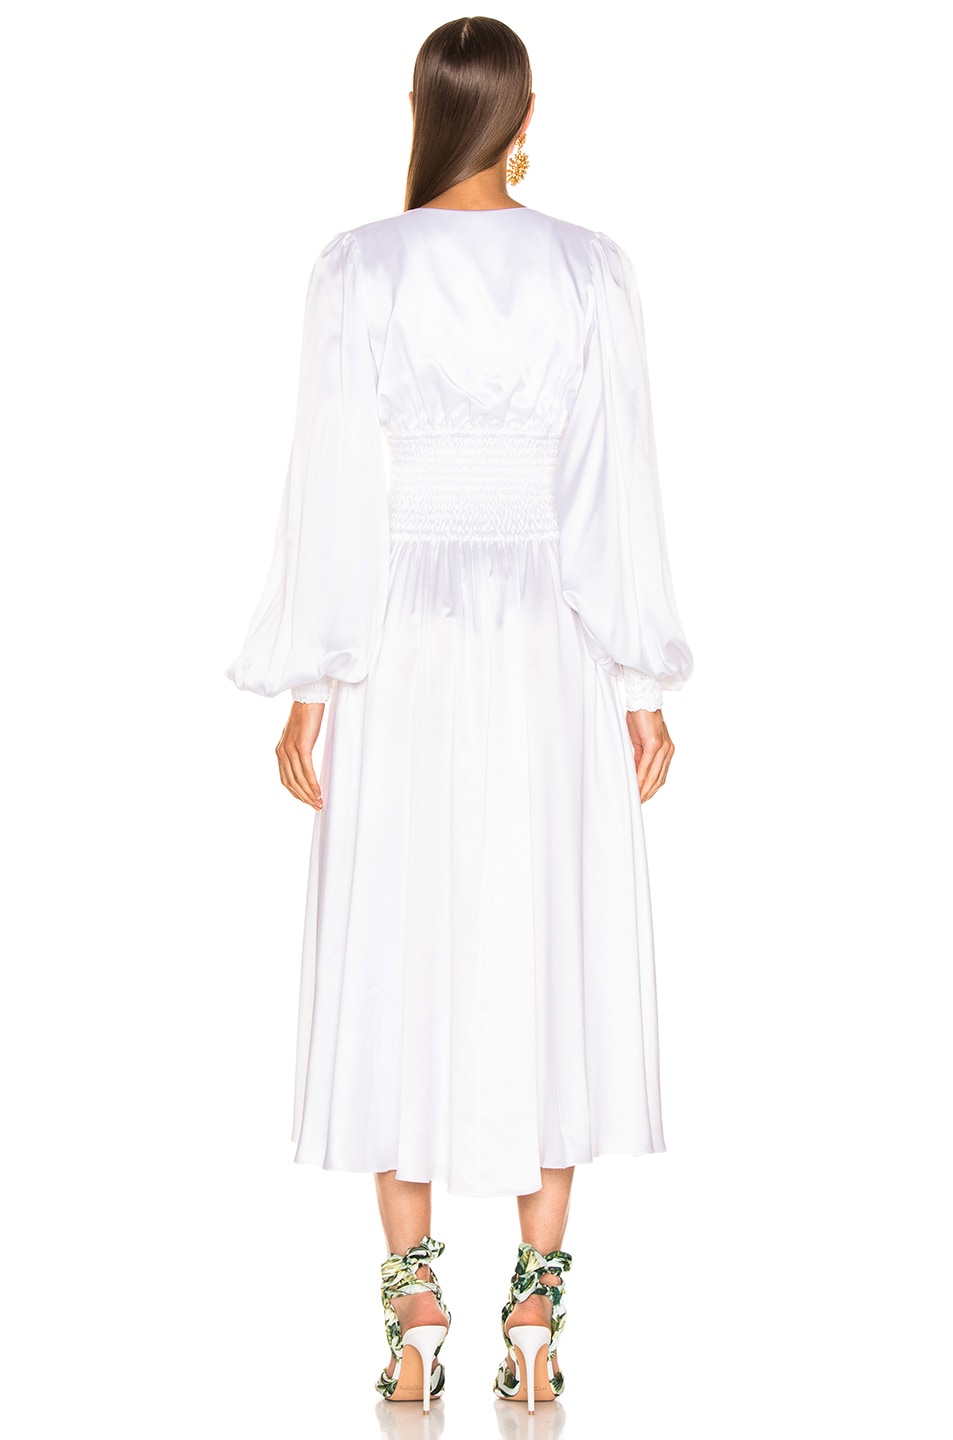 CAROLINE CONSTAS Syros Dress in White | FWRD